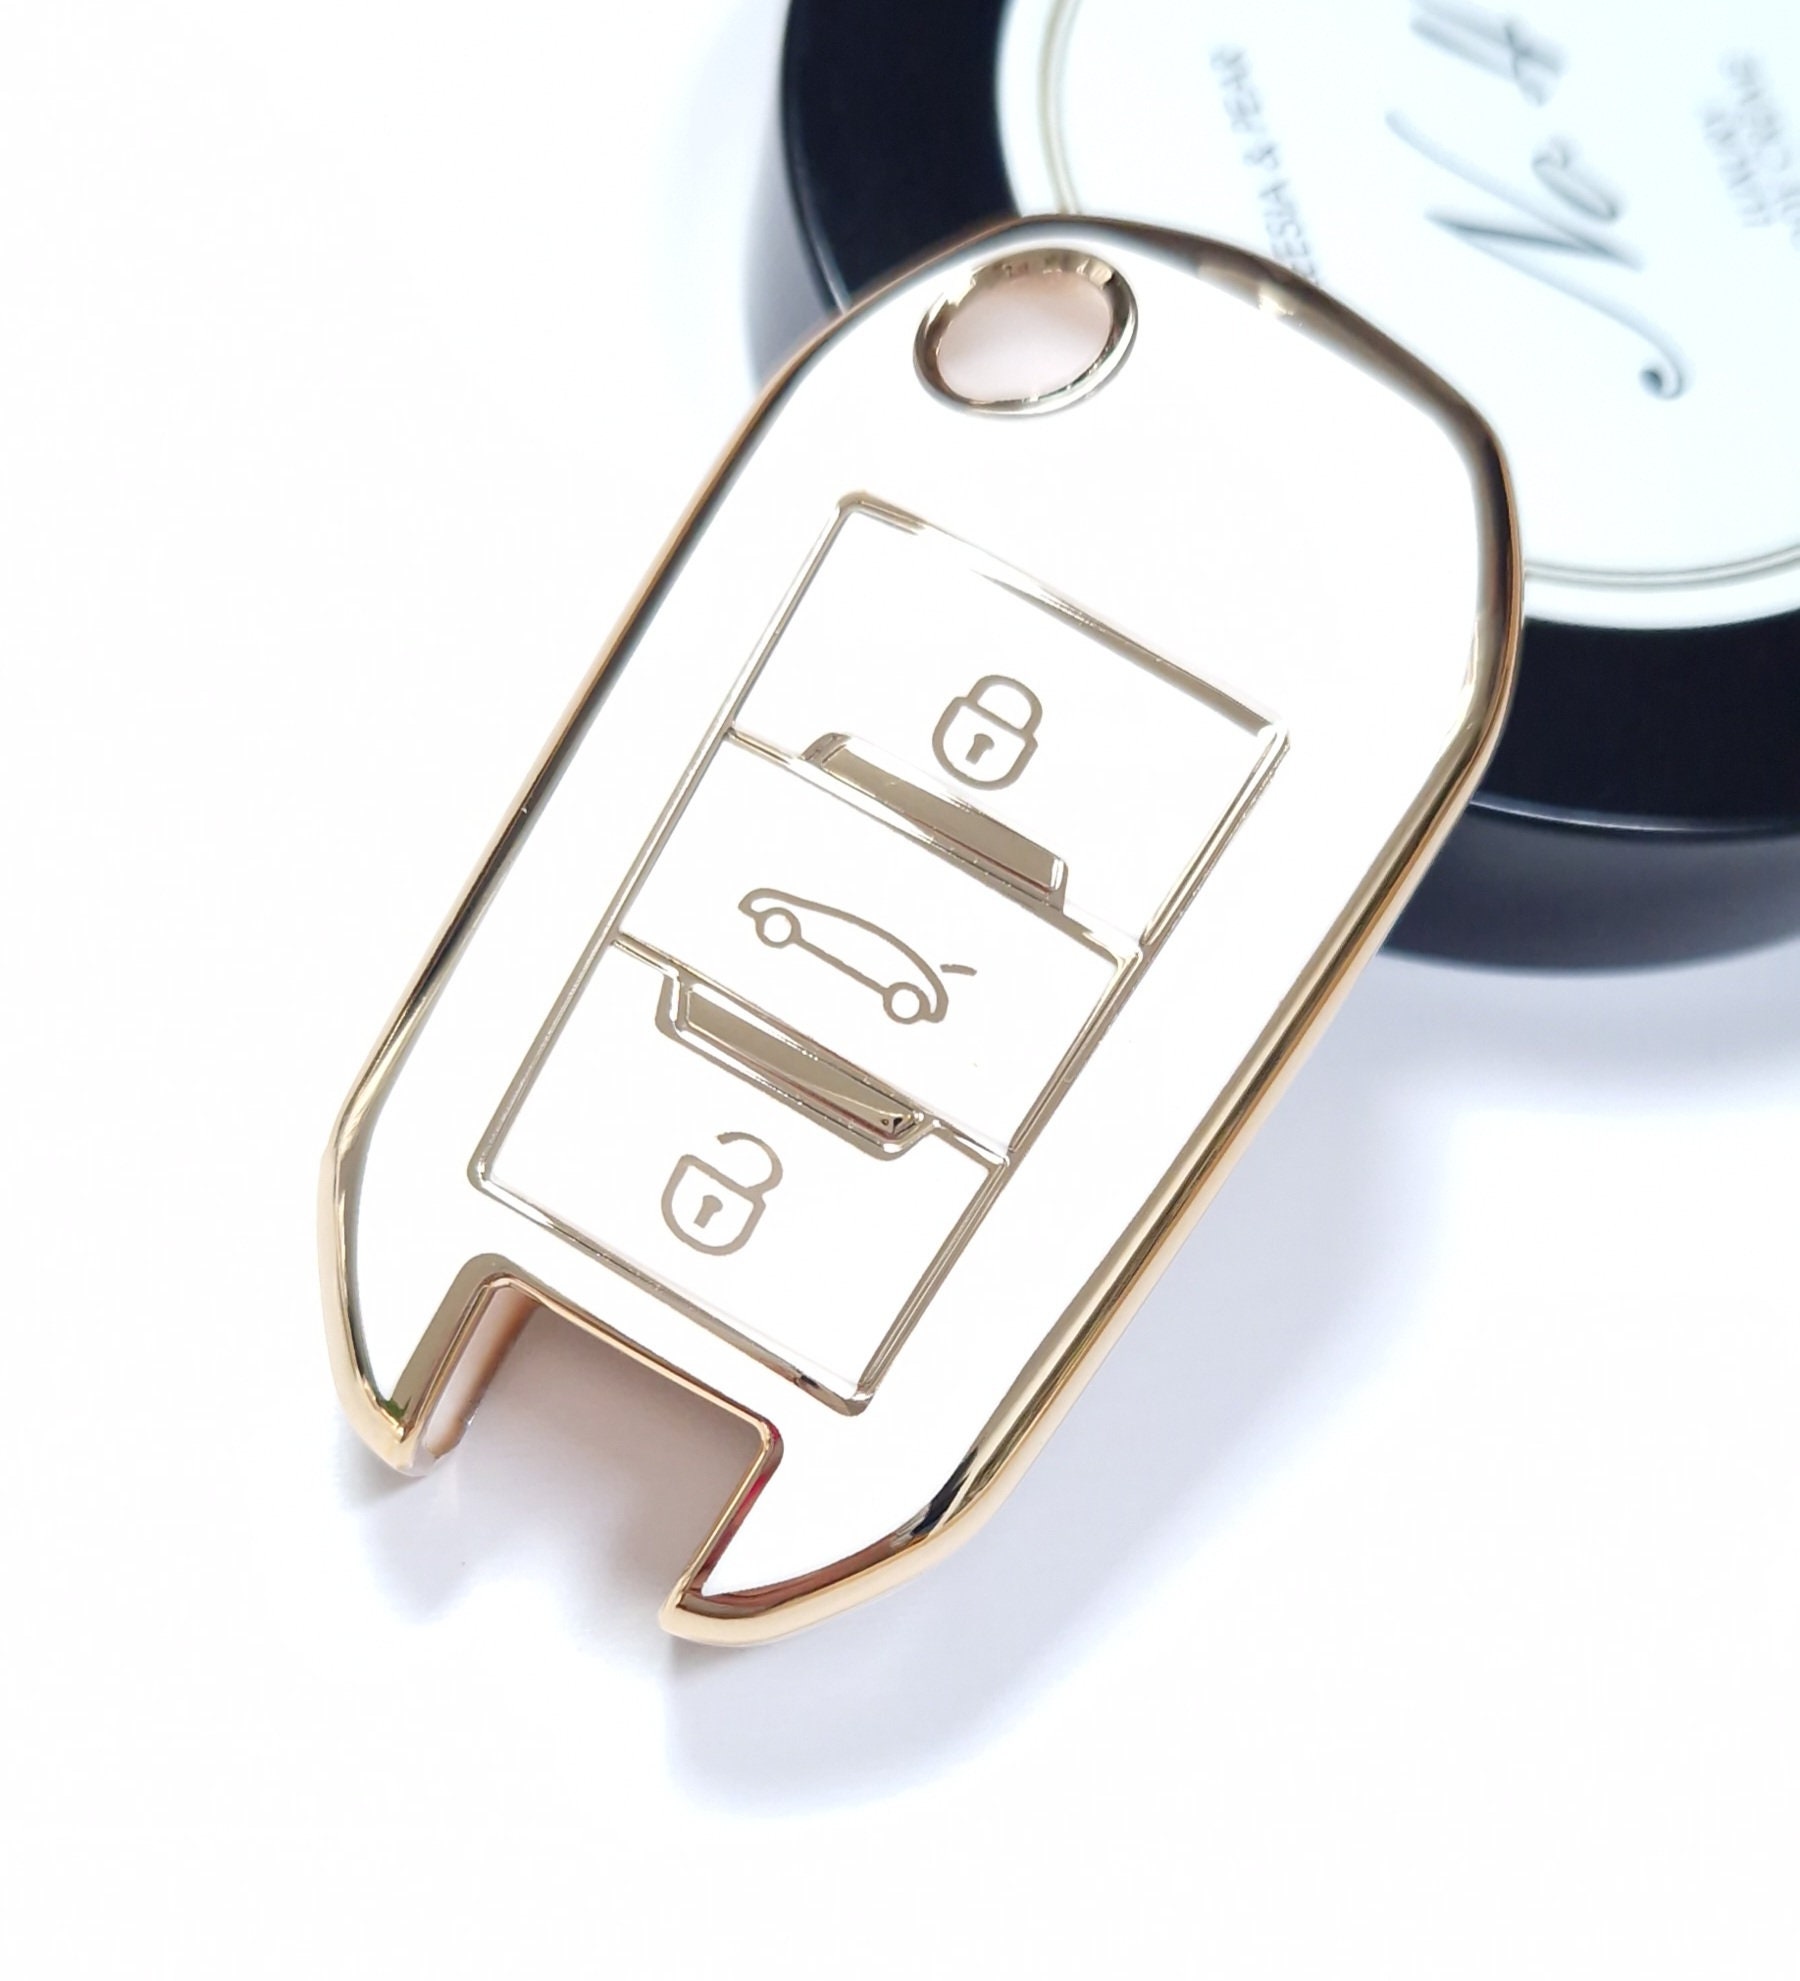 Funda Llave Smart Key Volkswagen Premium Tpu Colores – KeyMaker